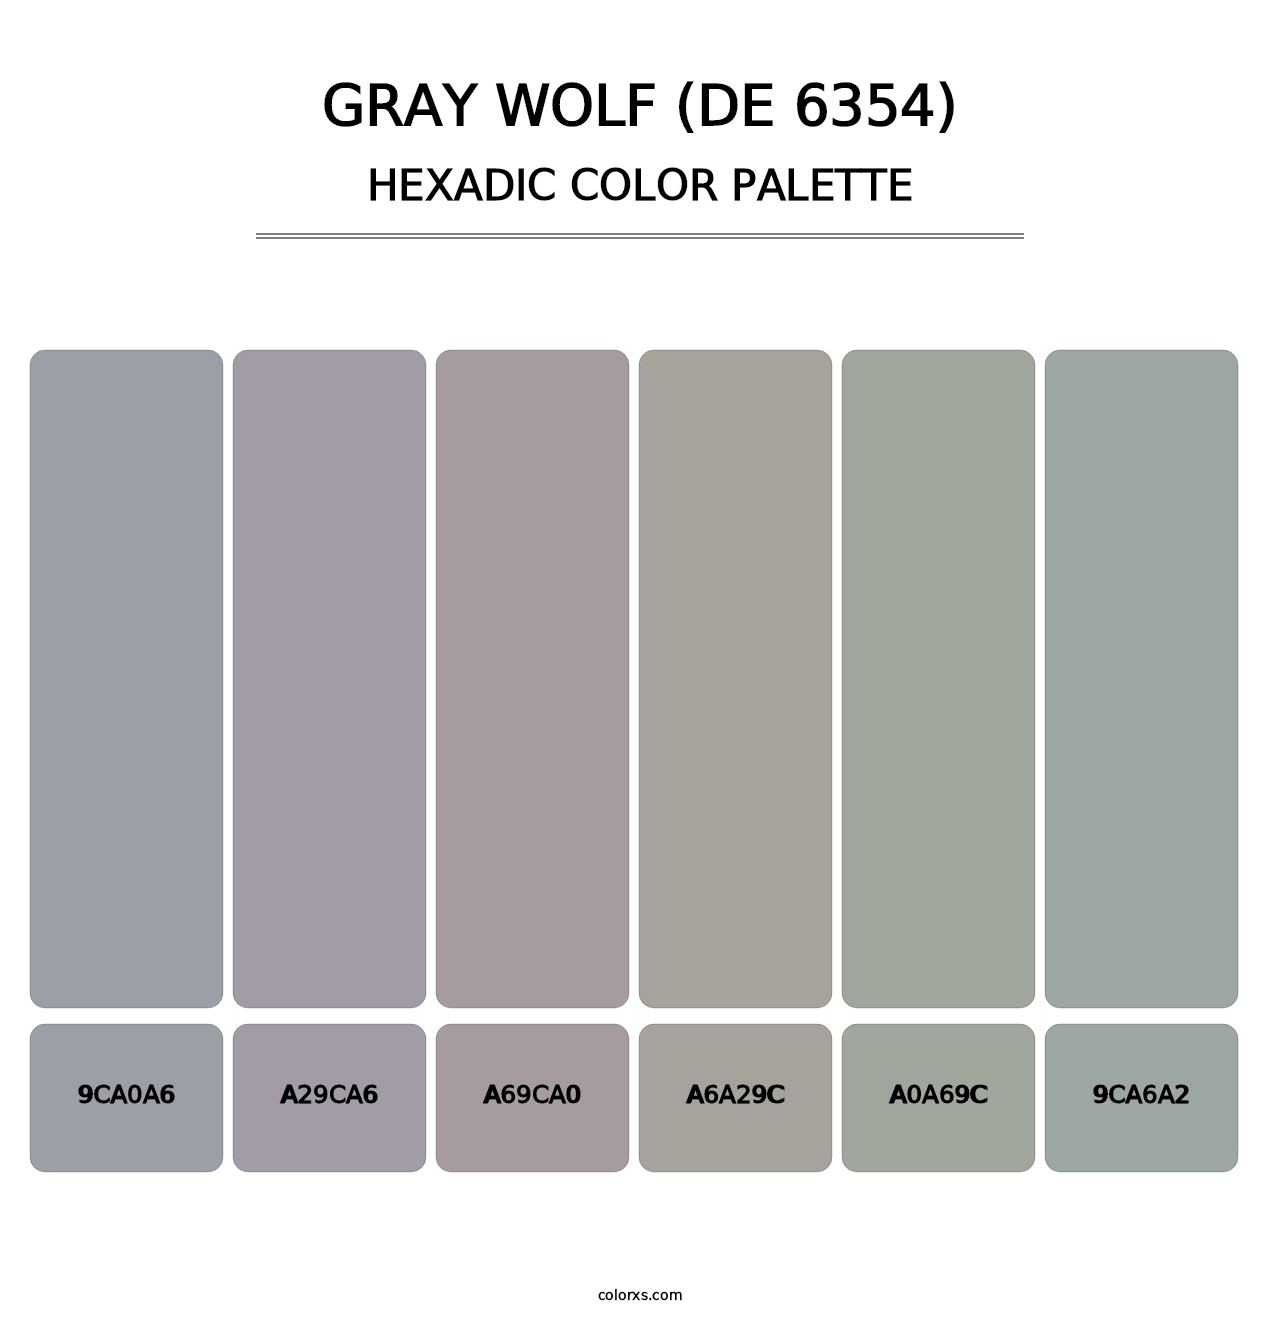 Gray Wolf (DE 6354) - Hexadic Color Palette